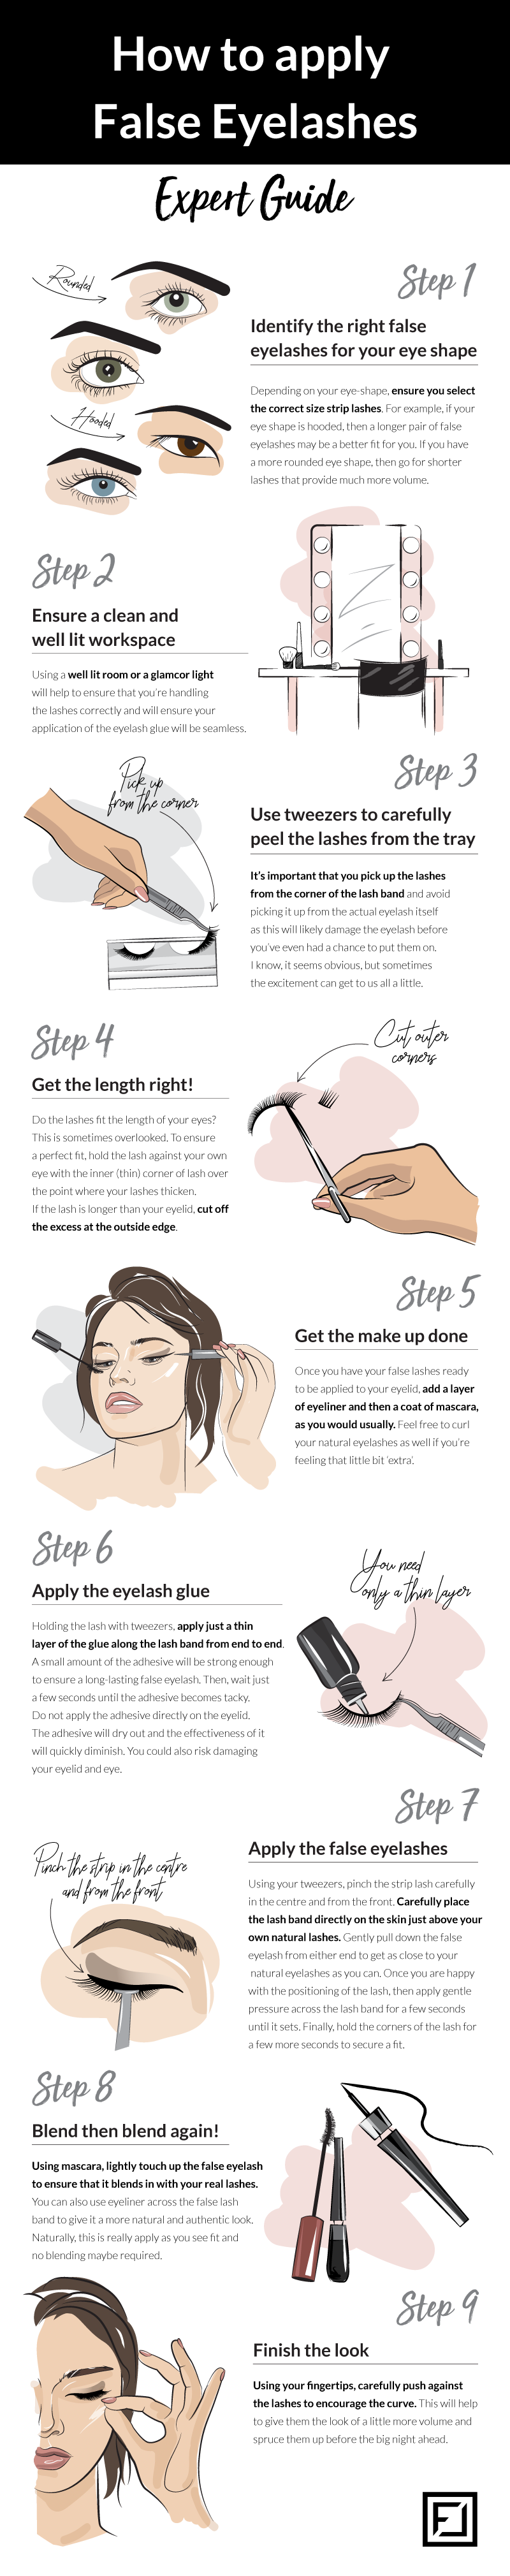 How To Apply False Eyelashes 9 Steps Flawless Lashes By Loreta